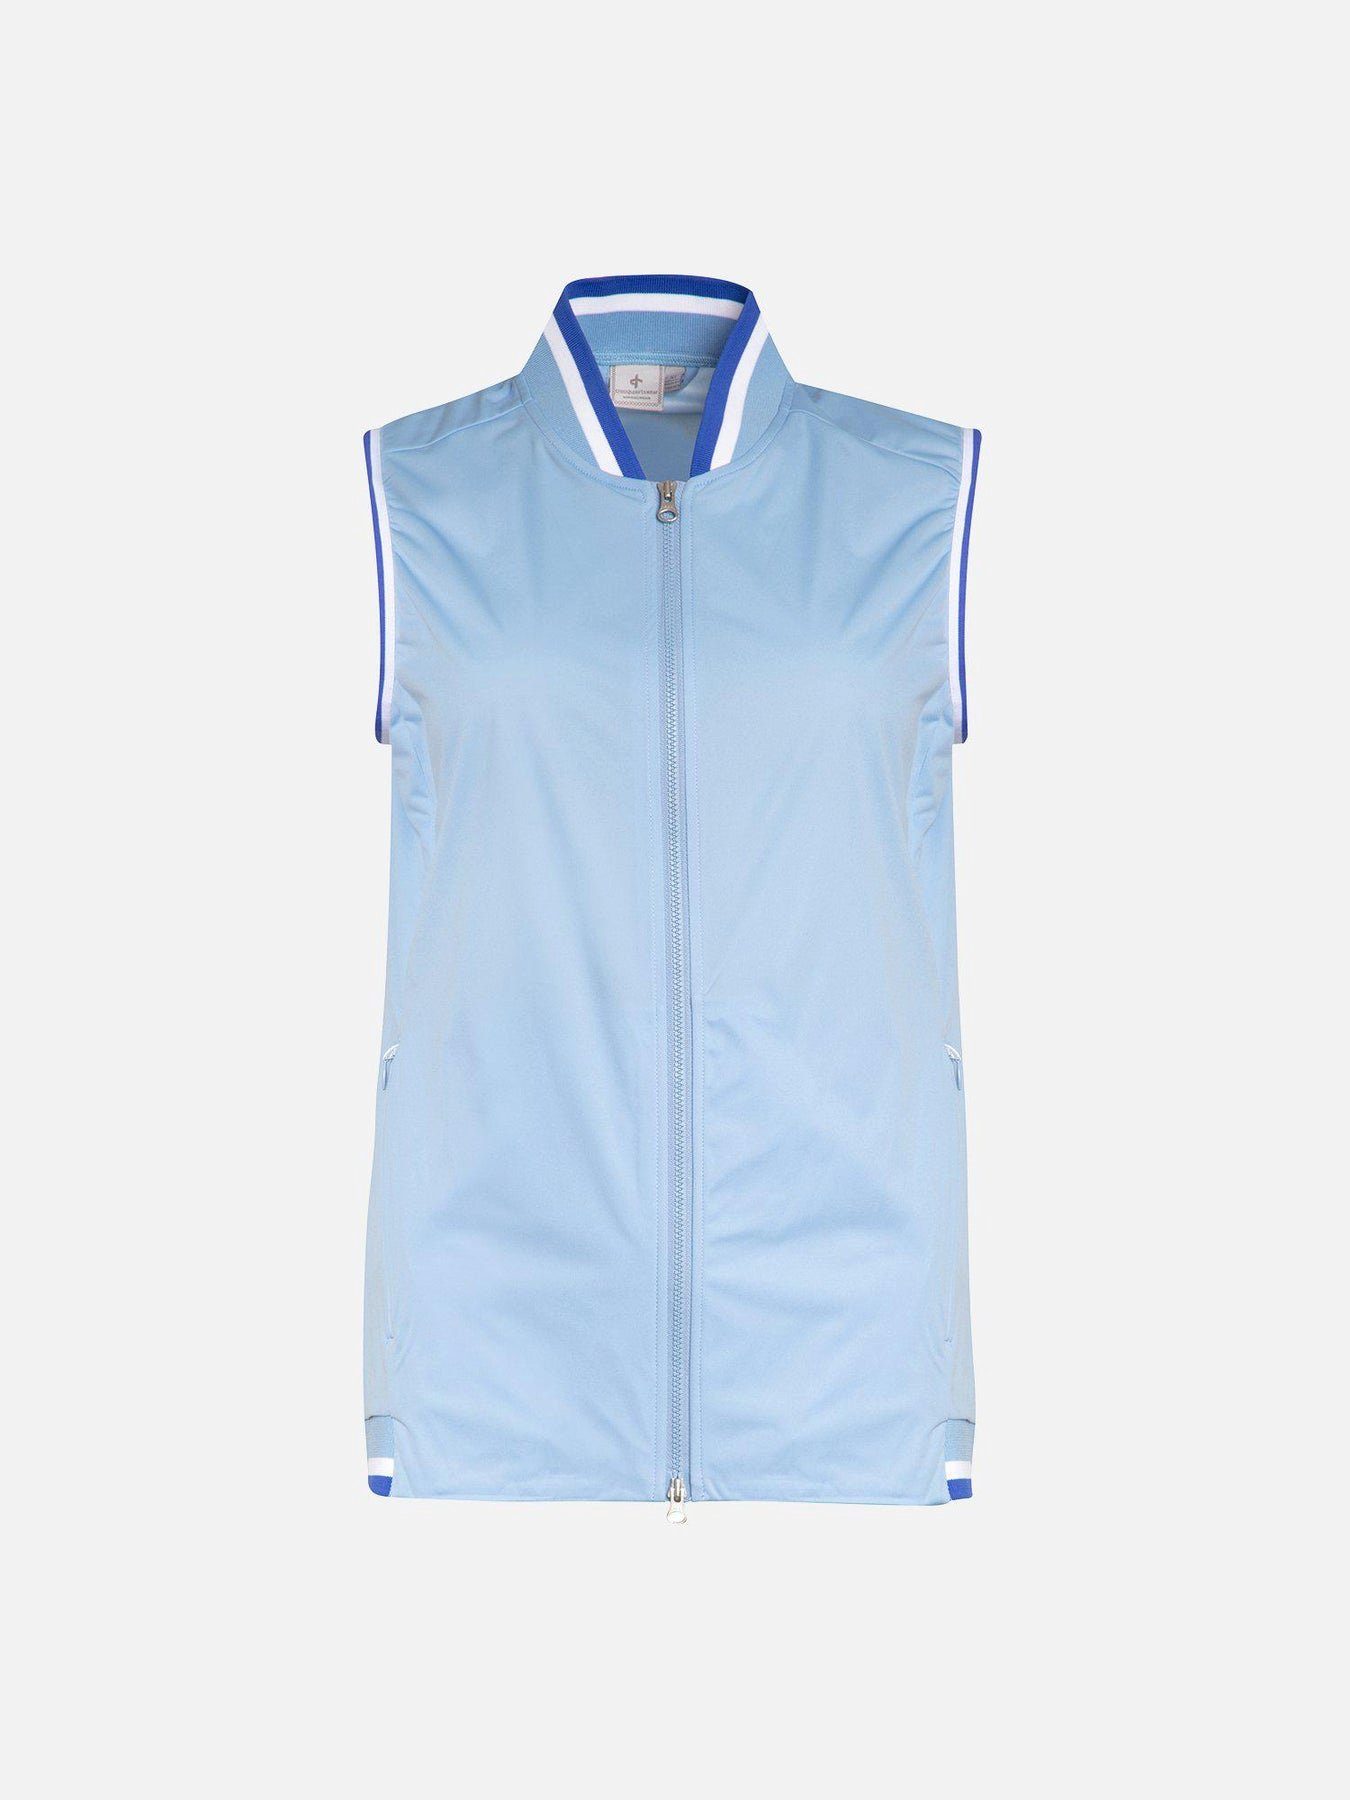 W 2 Vest Air Reißverschluss Sportswear I Damen Storm Vordertaschen Cross Golfweste Sportswear Cross Weste Blue